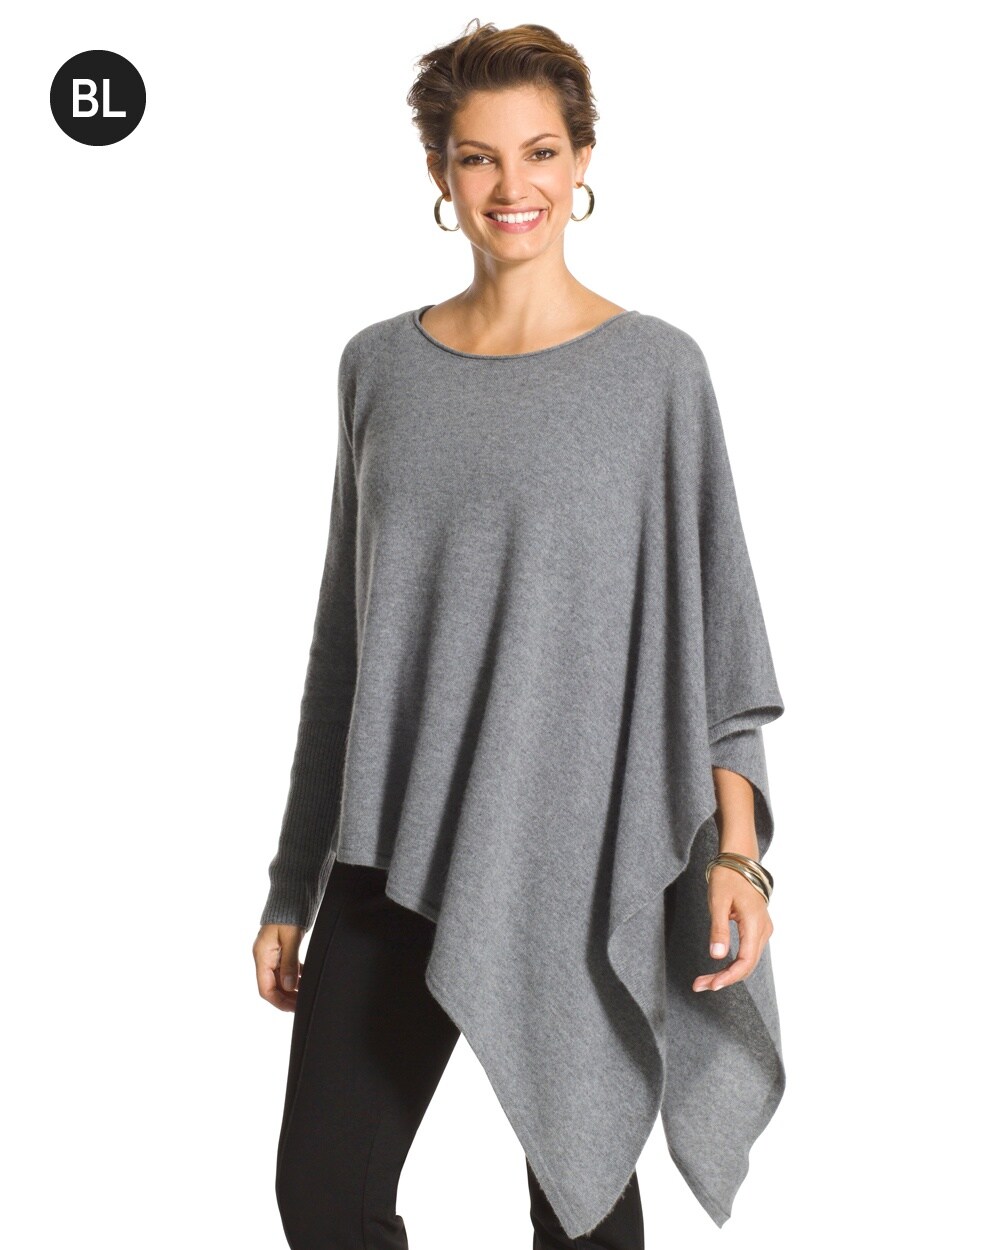 Black Label Asymmetrical Cashmere Sweater